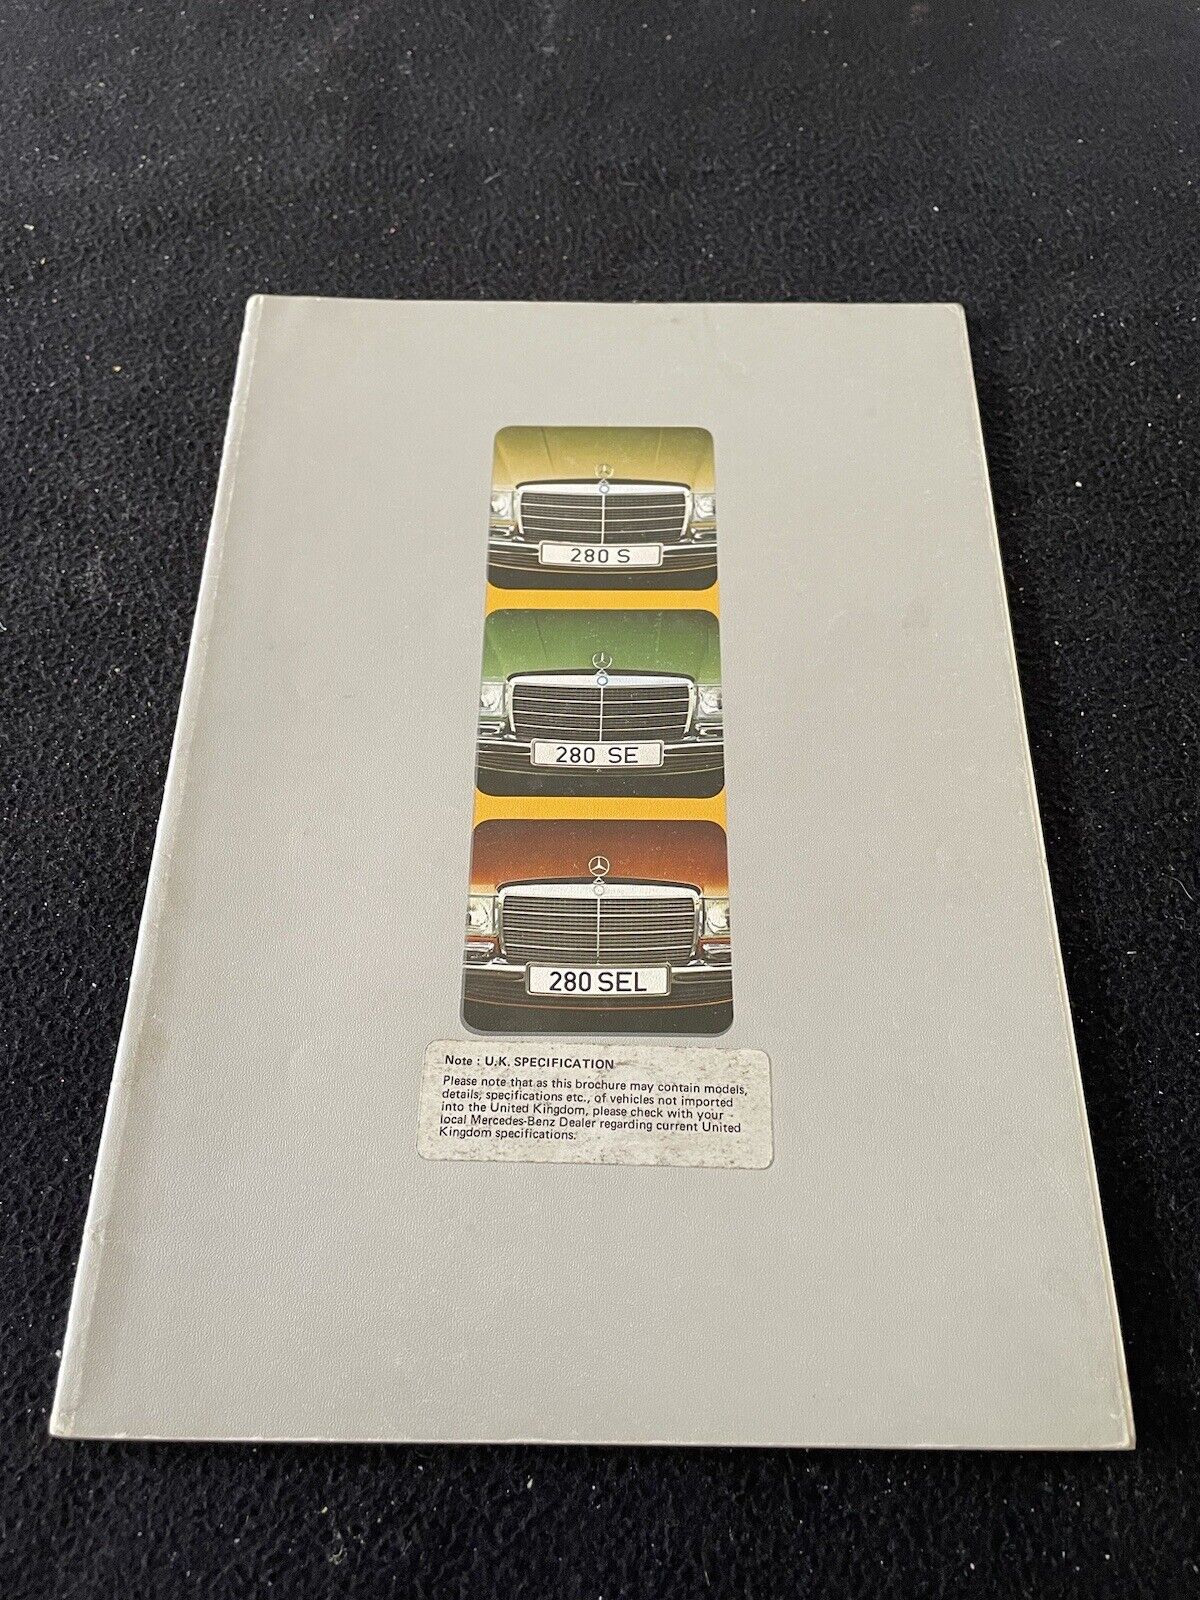 1974 1975 Mercedes S-class Euro Catalog W116 280S 280SE 280SEL 6-cyl UK Brochure